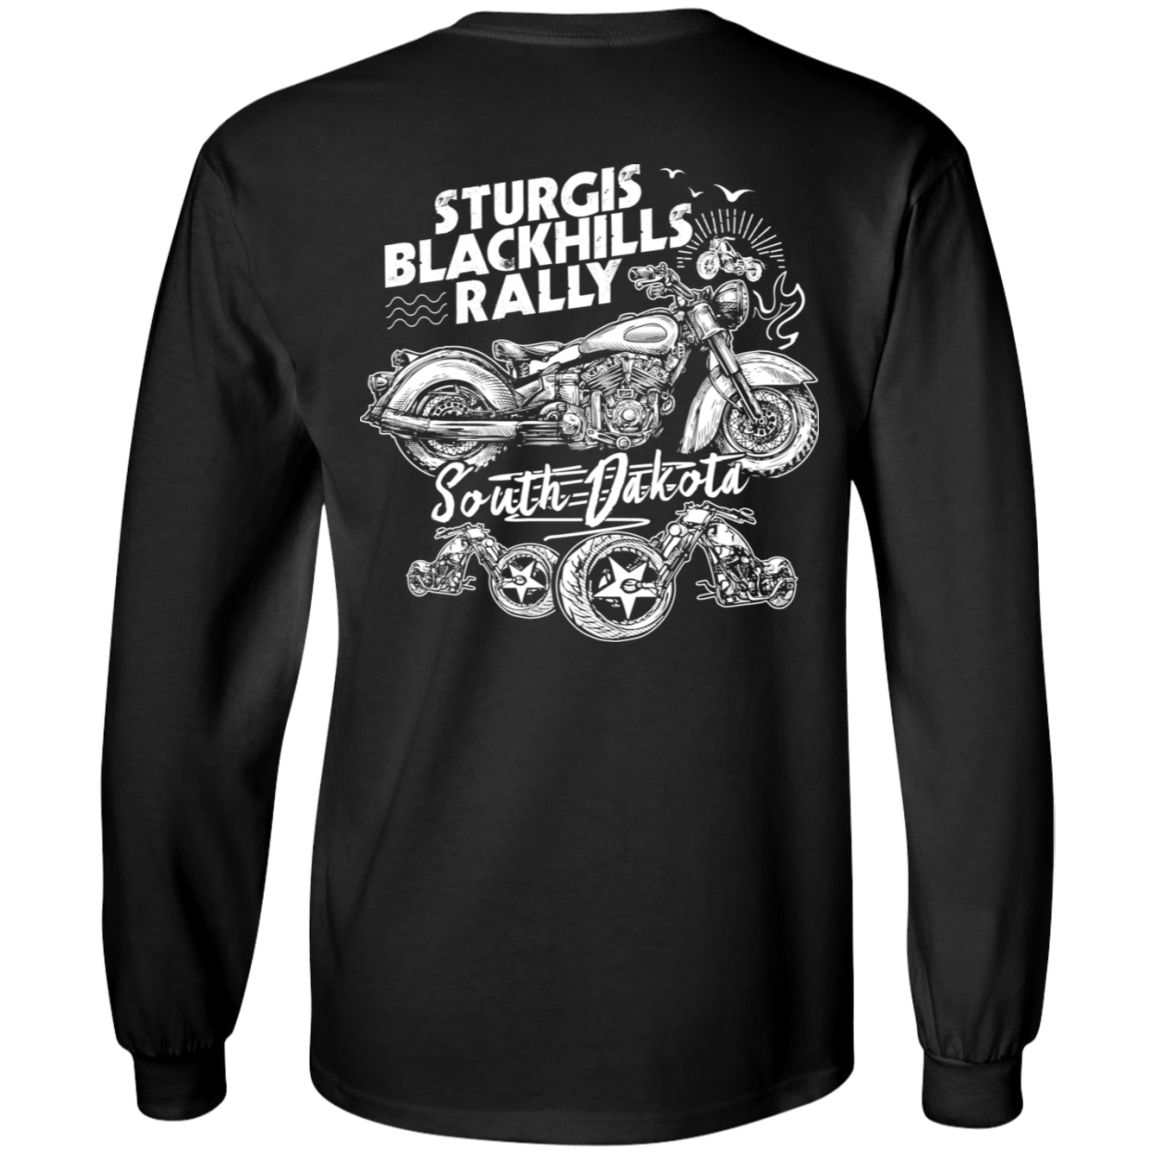 Sturgis Blackhills Rally South Dakota Long Sleeve T-Shirt, Cotton, Black